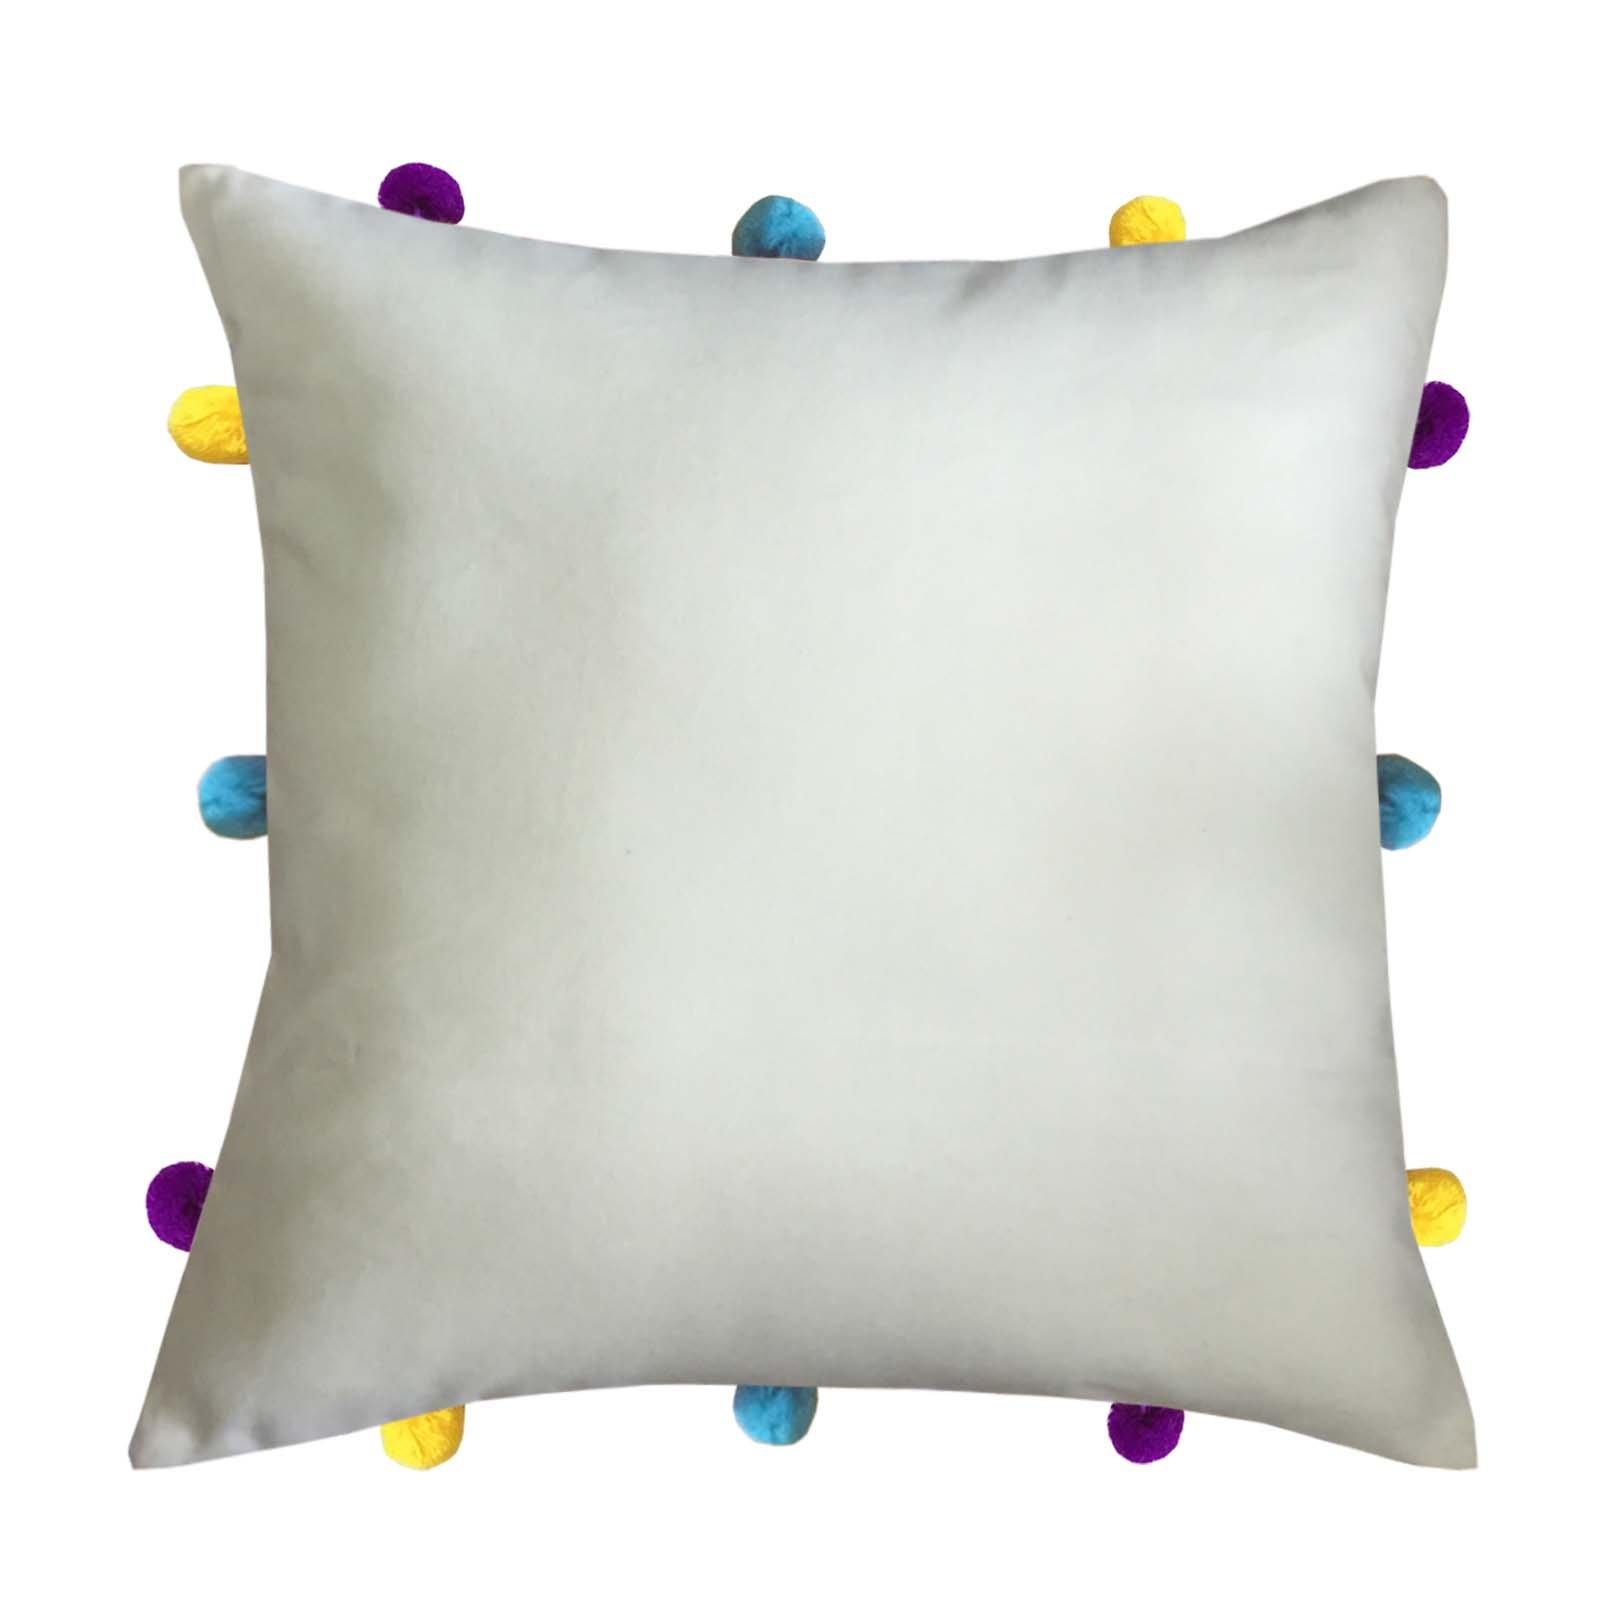 Lushomes Ecru Cushion Cover with Colorful pom poms (Single pc, 12 x 12”) - Lushomes